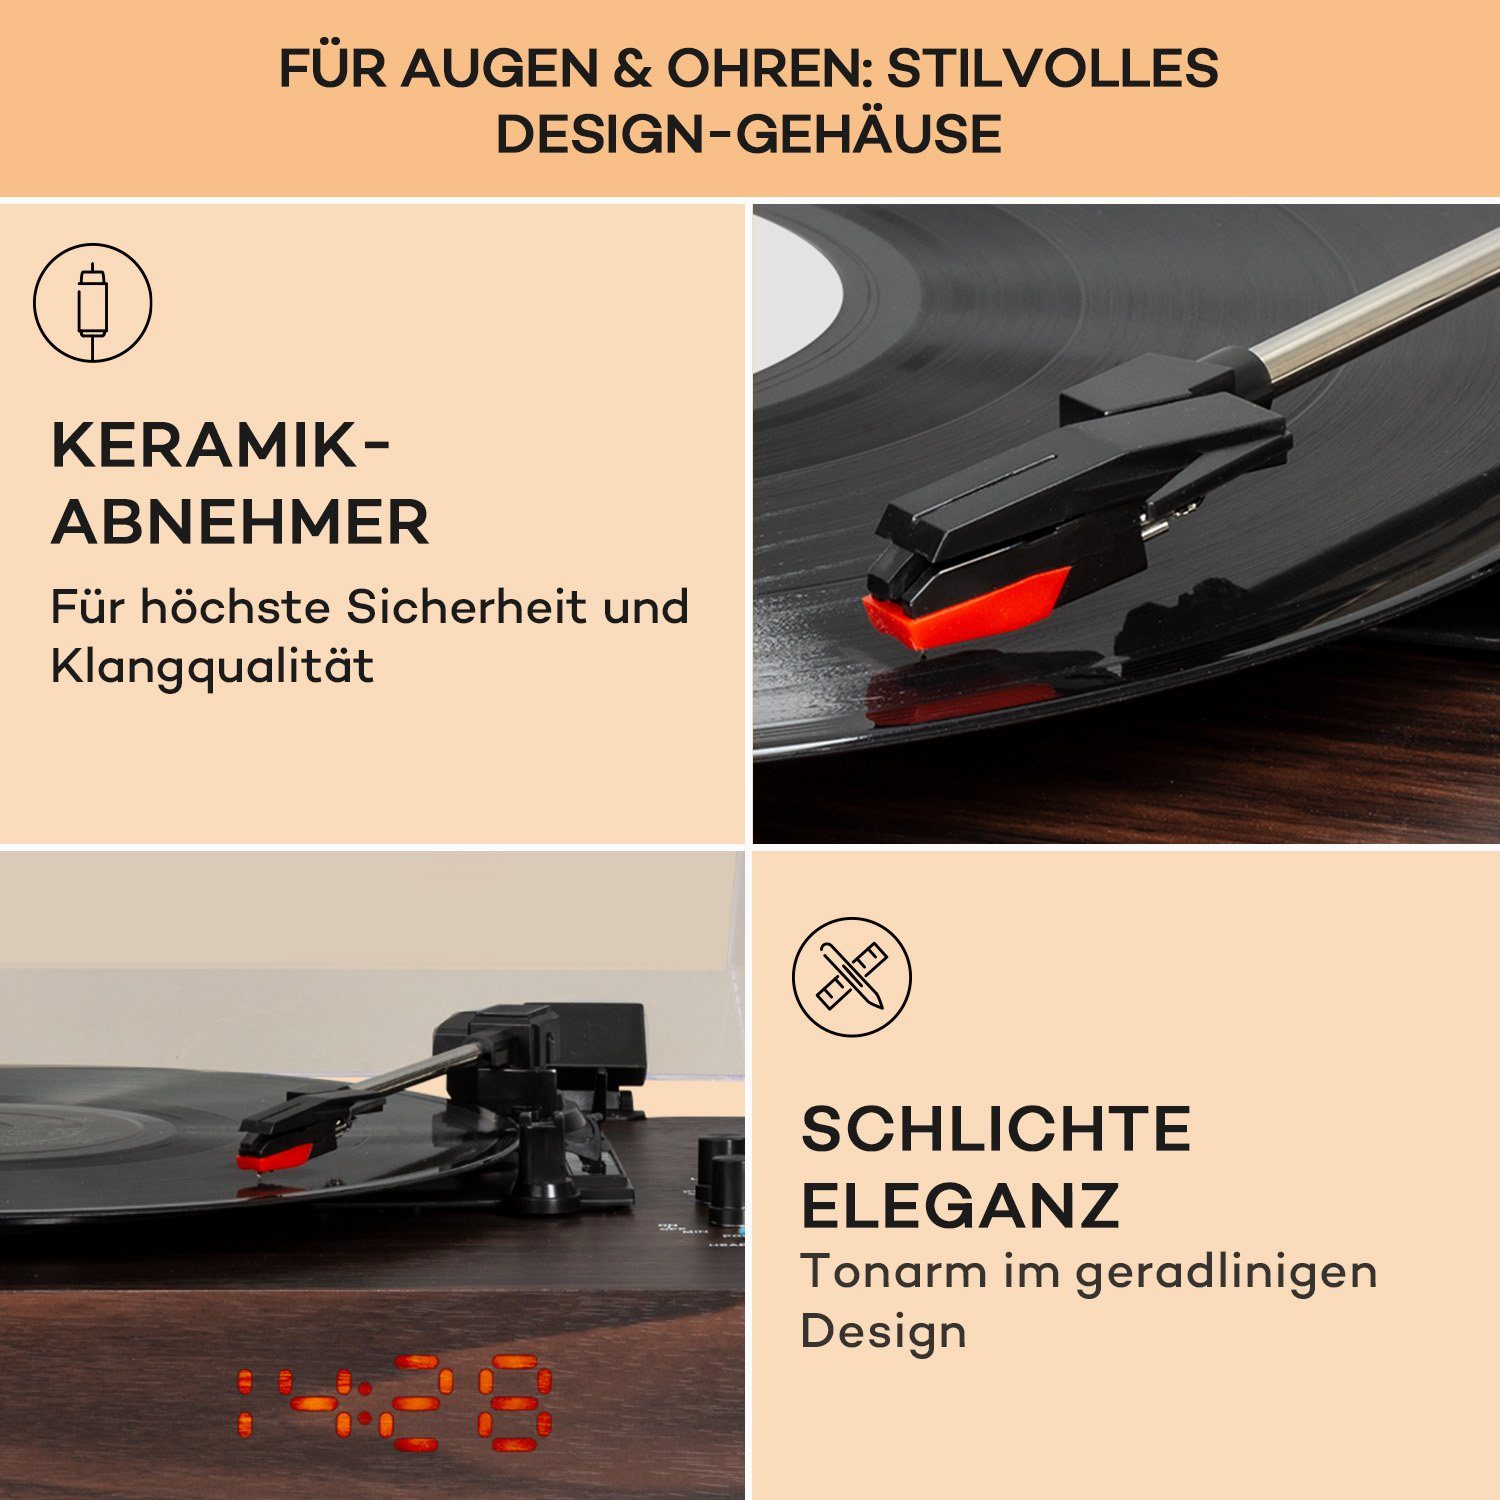 mit Auna (Riemenantrieb, Bluetooth, TT-Classic Chrono Vinyl Plattenspieler) Schallplattenspieler Lautsprecher Plattenspieler